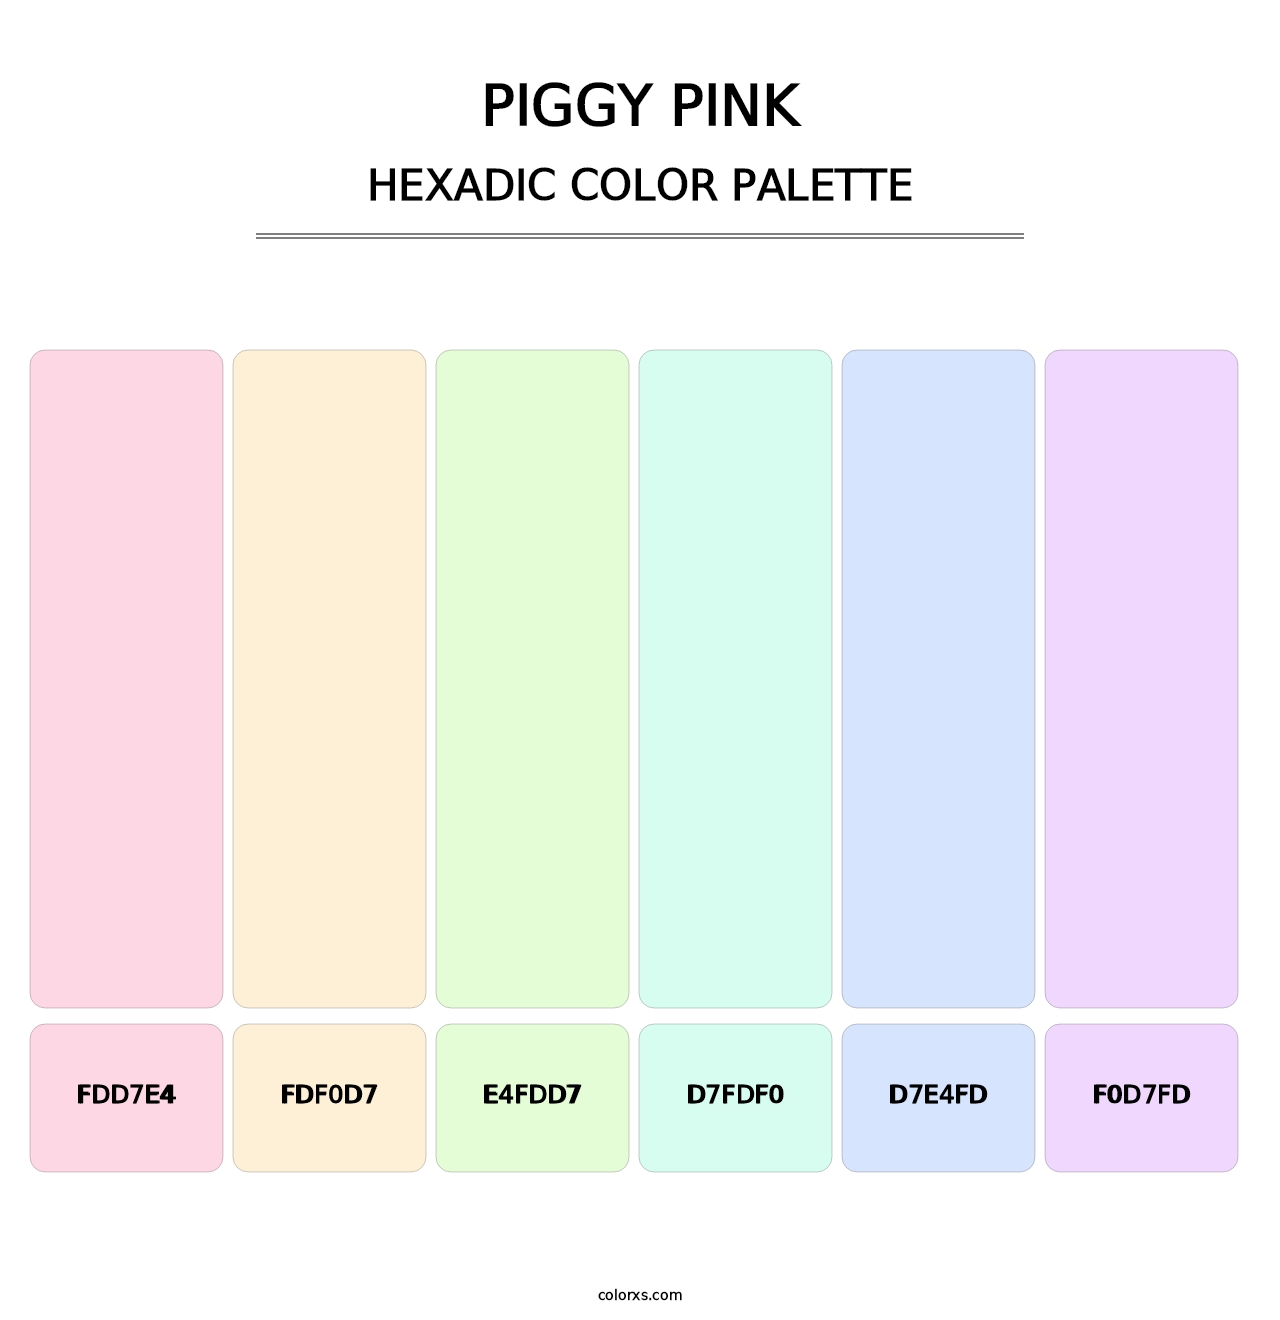 Piggy Pink - Hexadic Color Palette